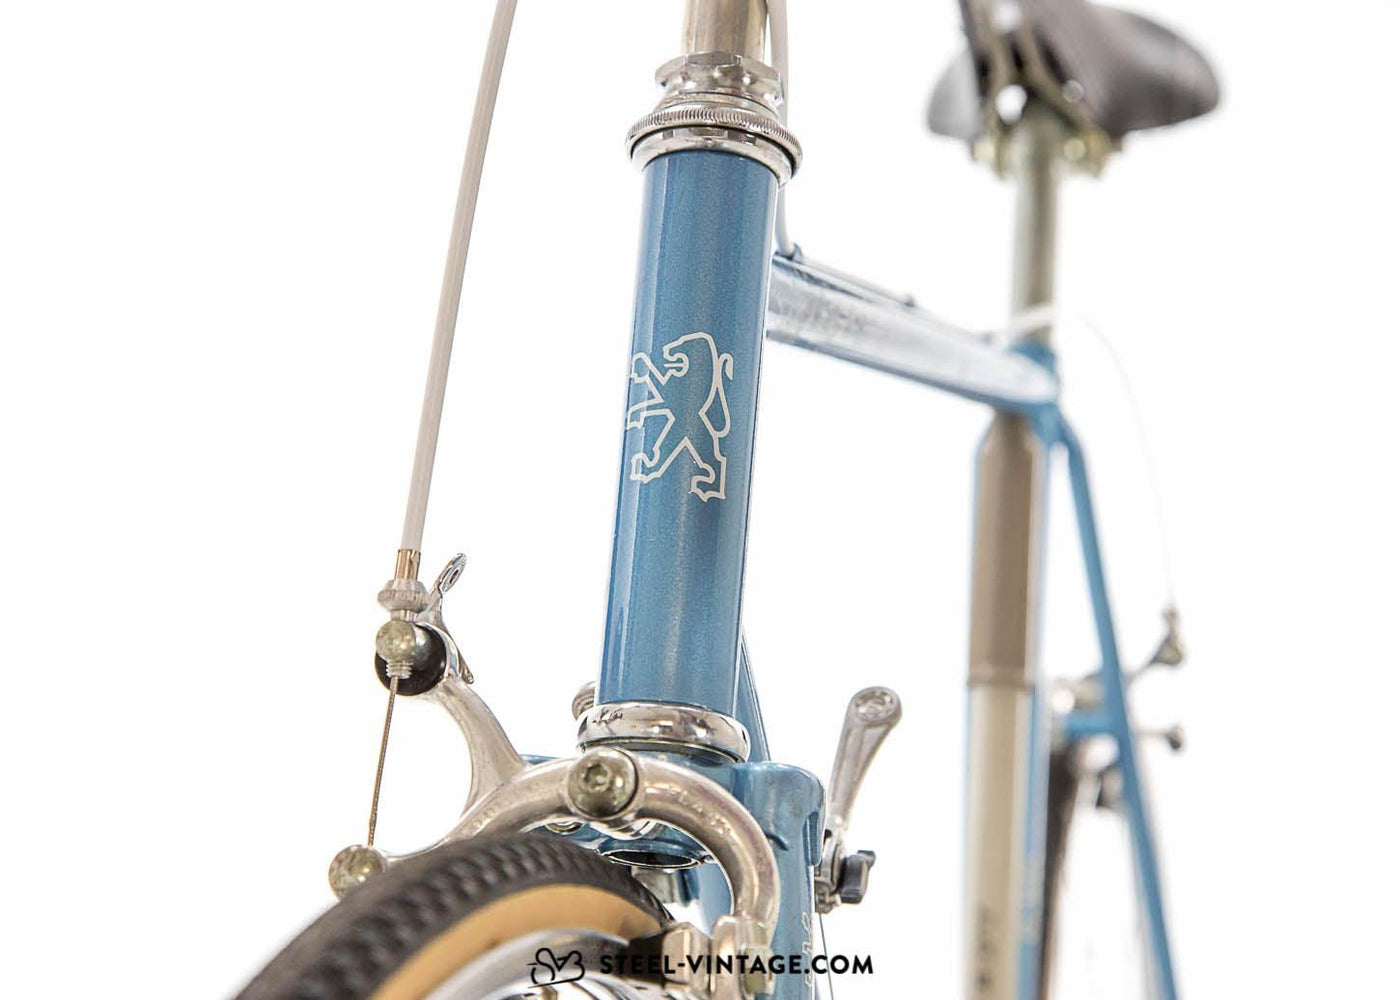 Peugeot PH10S Classic Road Bike 1980s - Steel Vintage Bikes